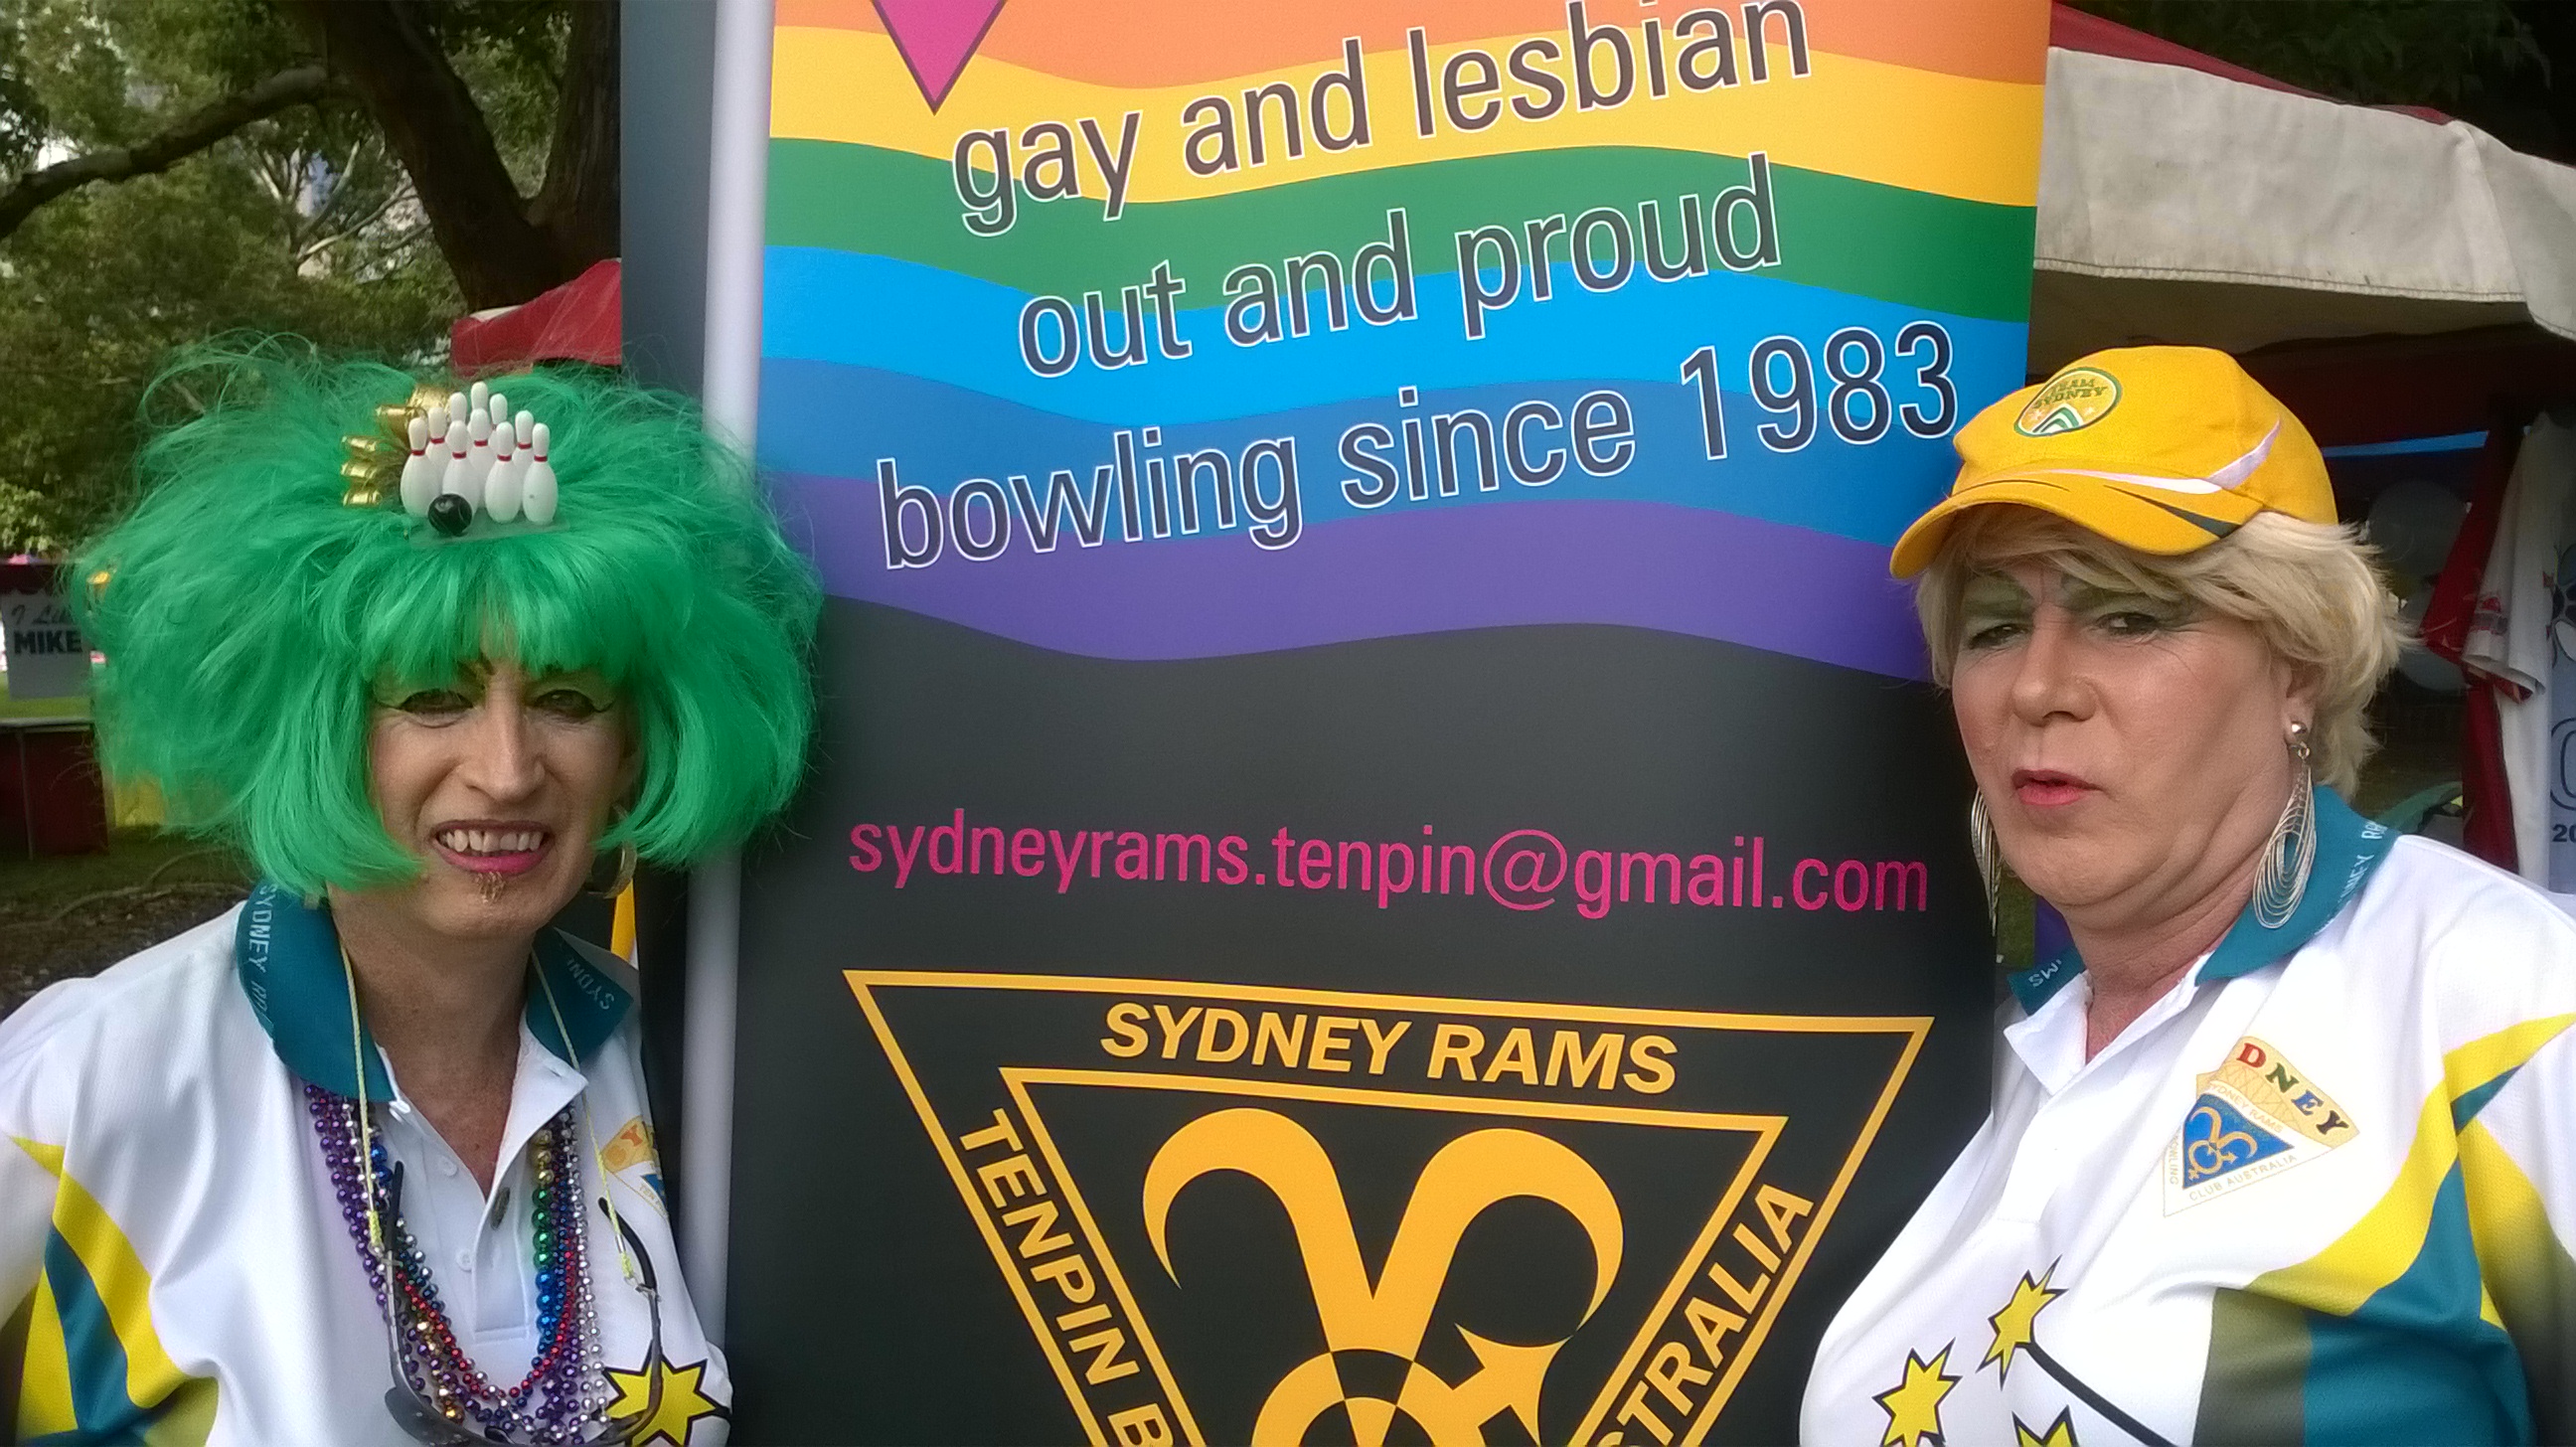 The LGBTI tenpin bowling league scoring strikes for 35 years